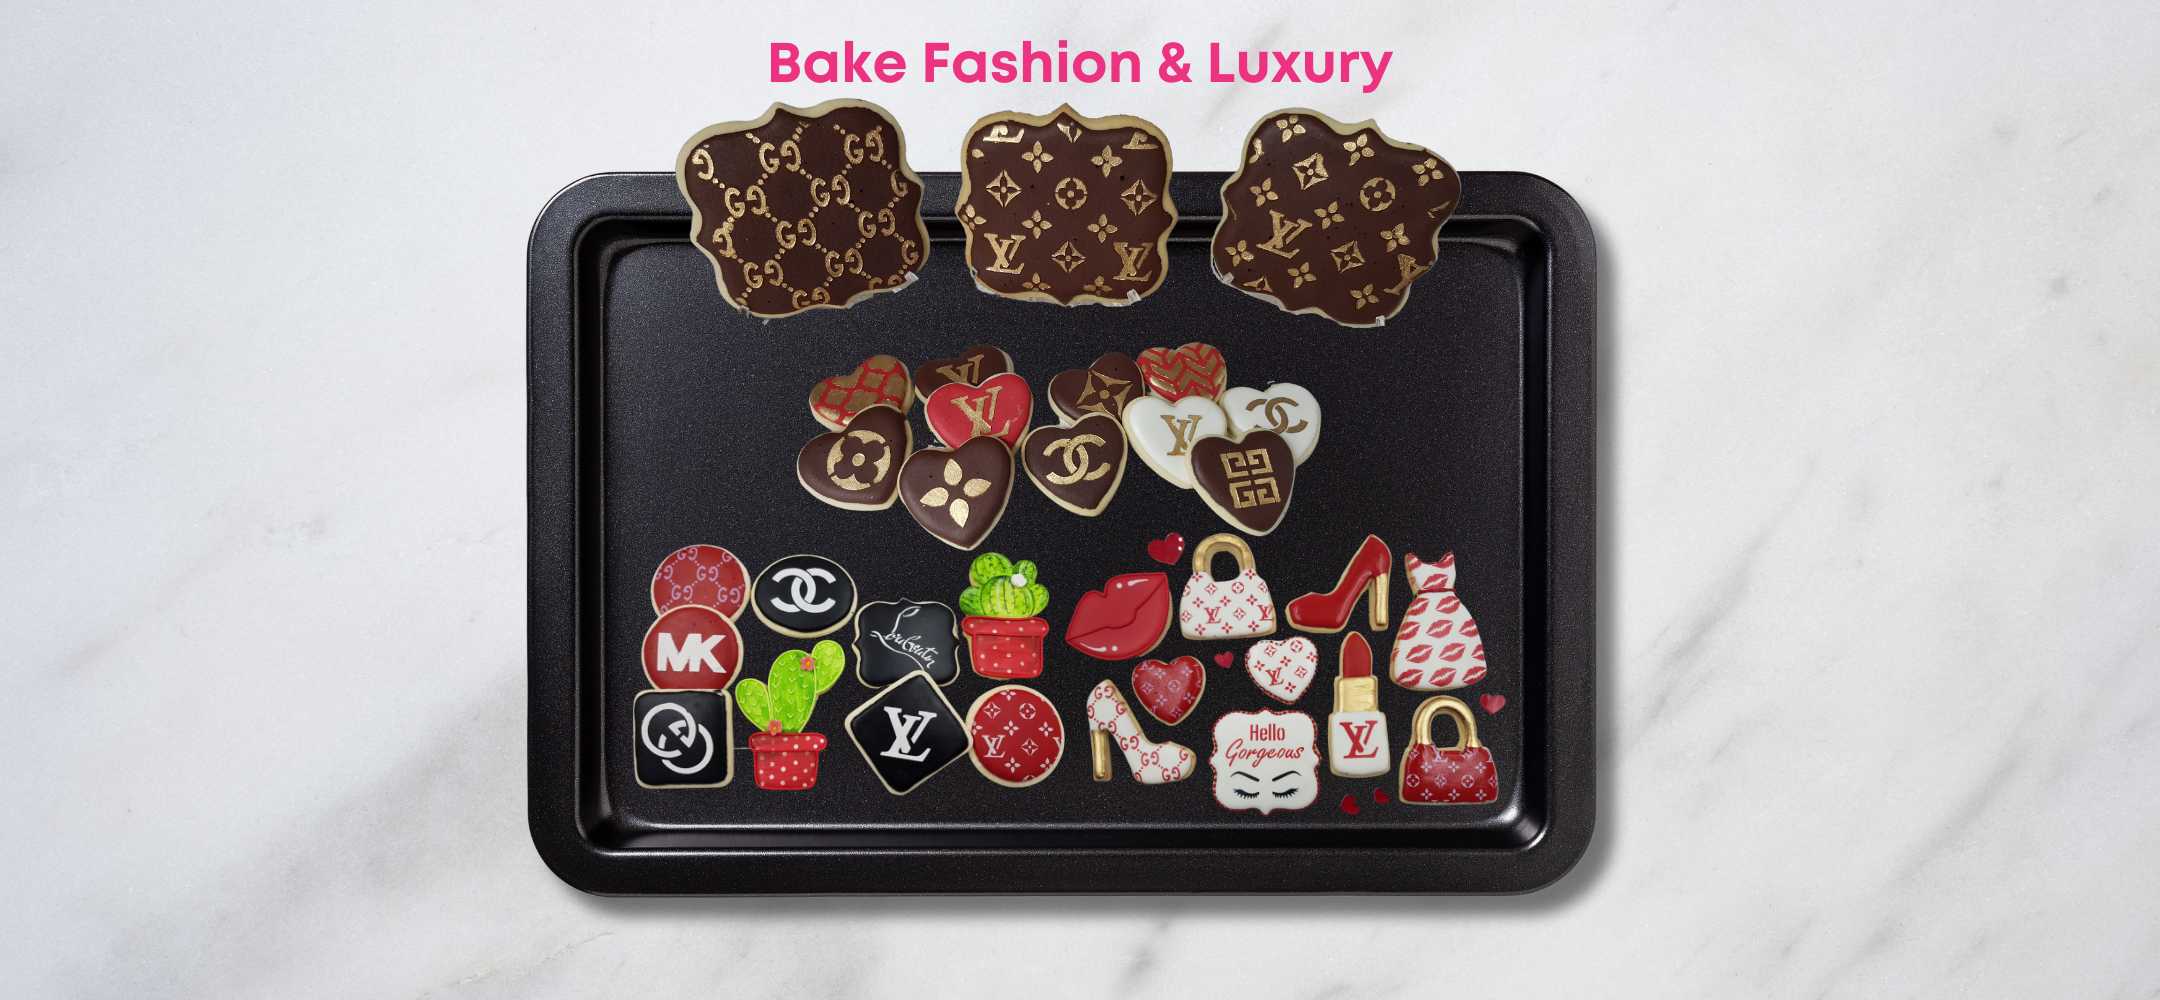 Buy 8 pcs LV Designer Fashion Cake Stencil, Cookie Stencil